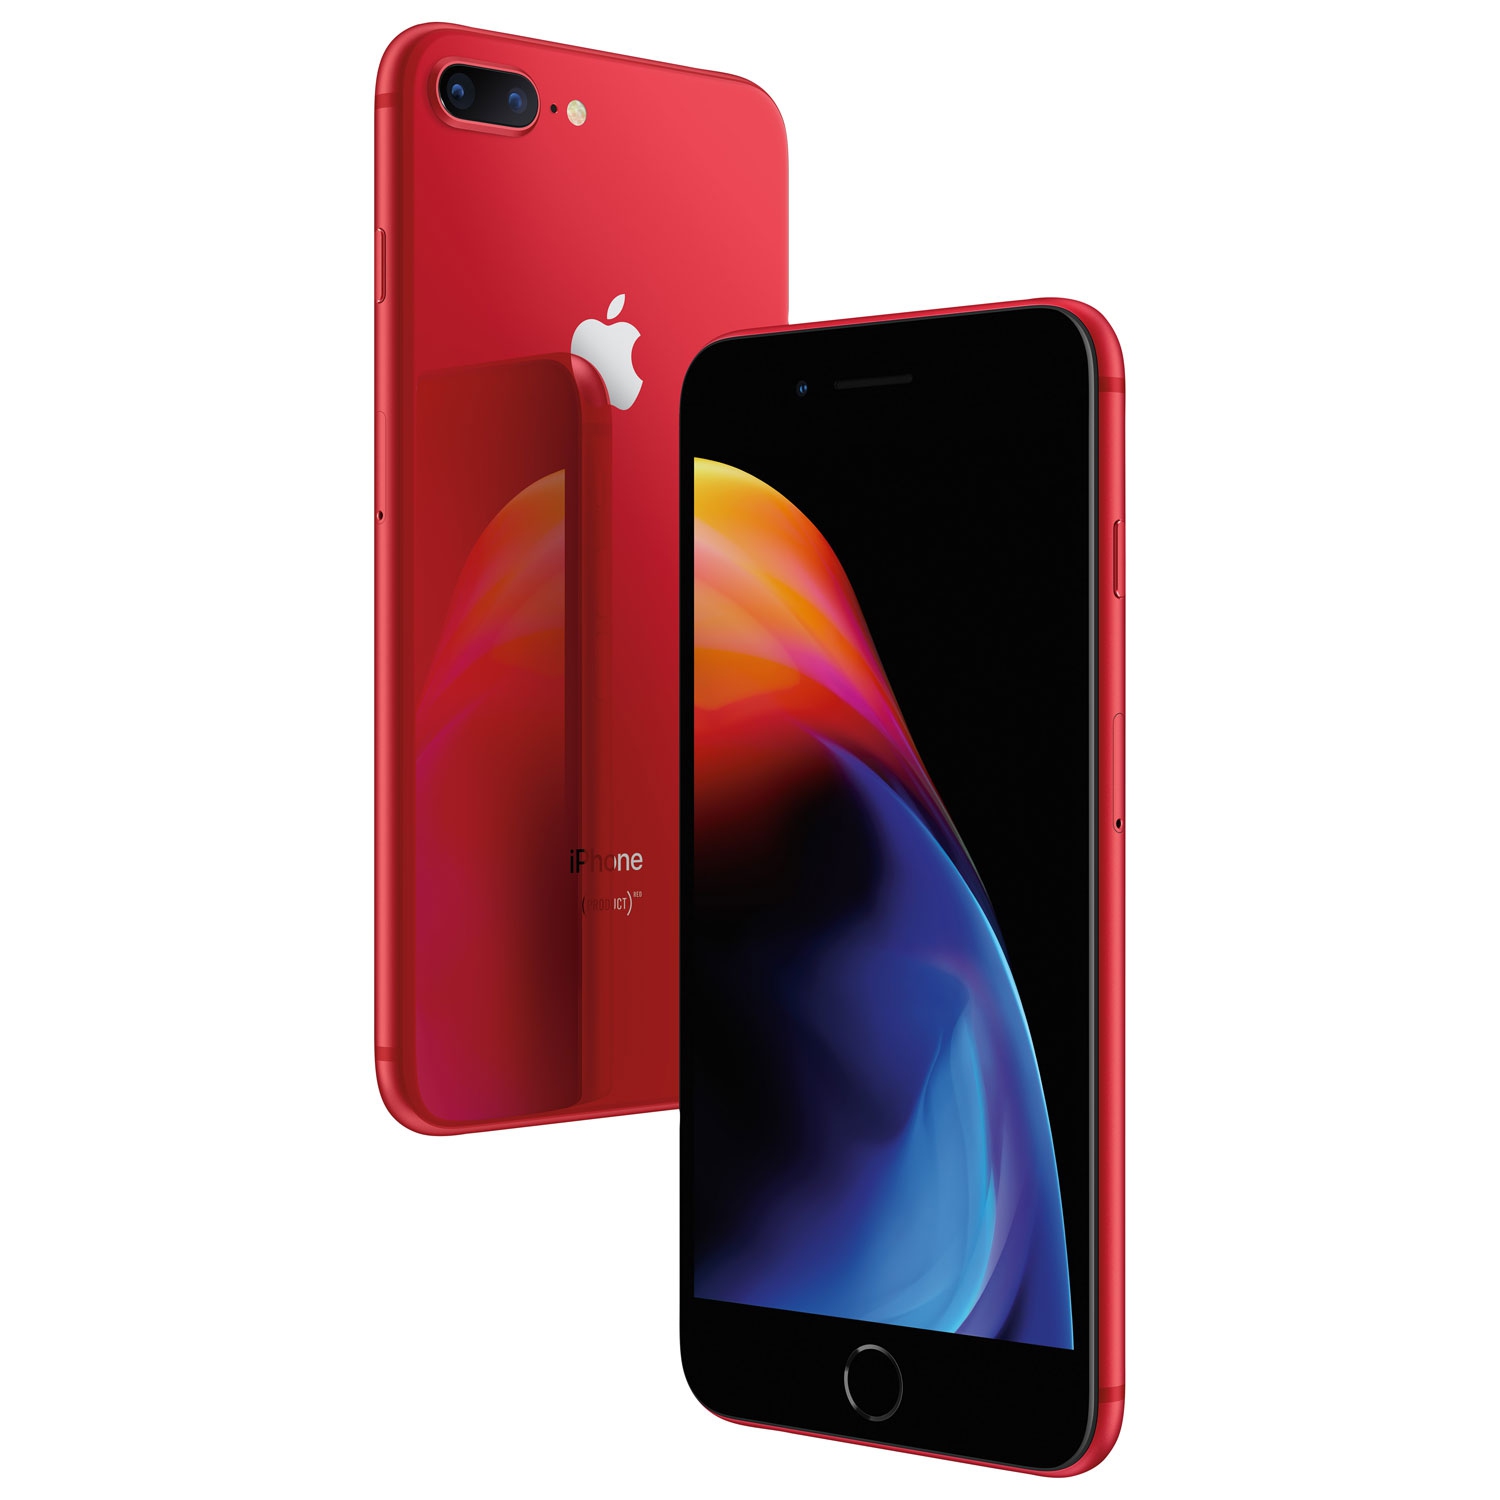 Refurbished (Good) - Apple iPhone 8 Plus 64GB Smartphone - (Product)RED - Unlocked